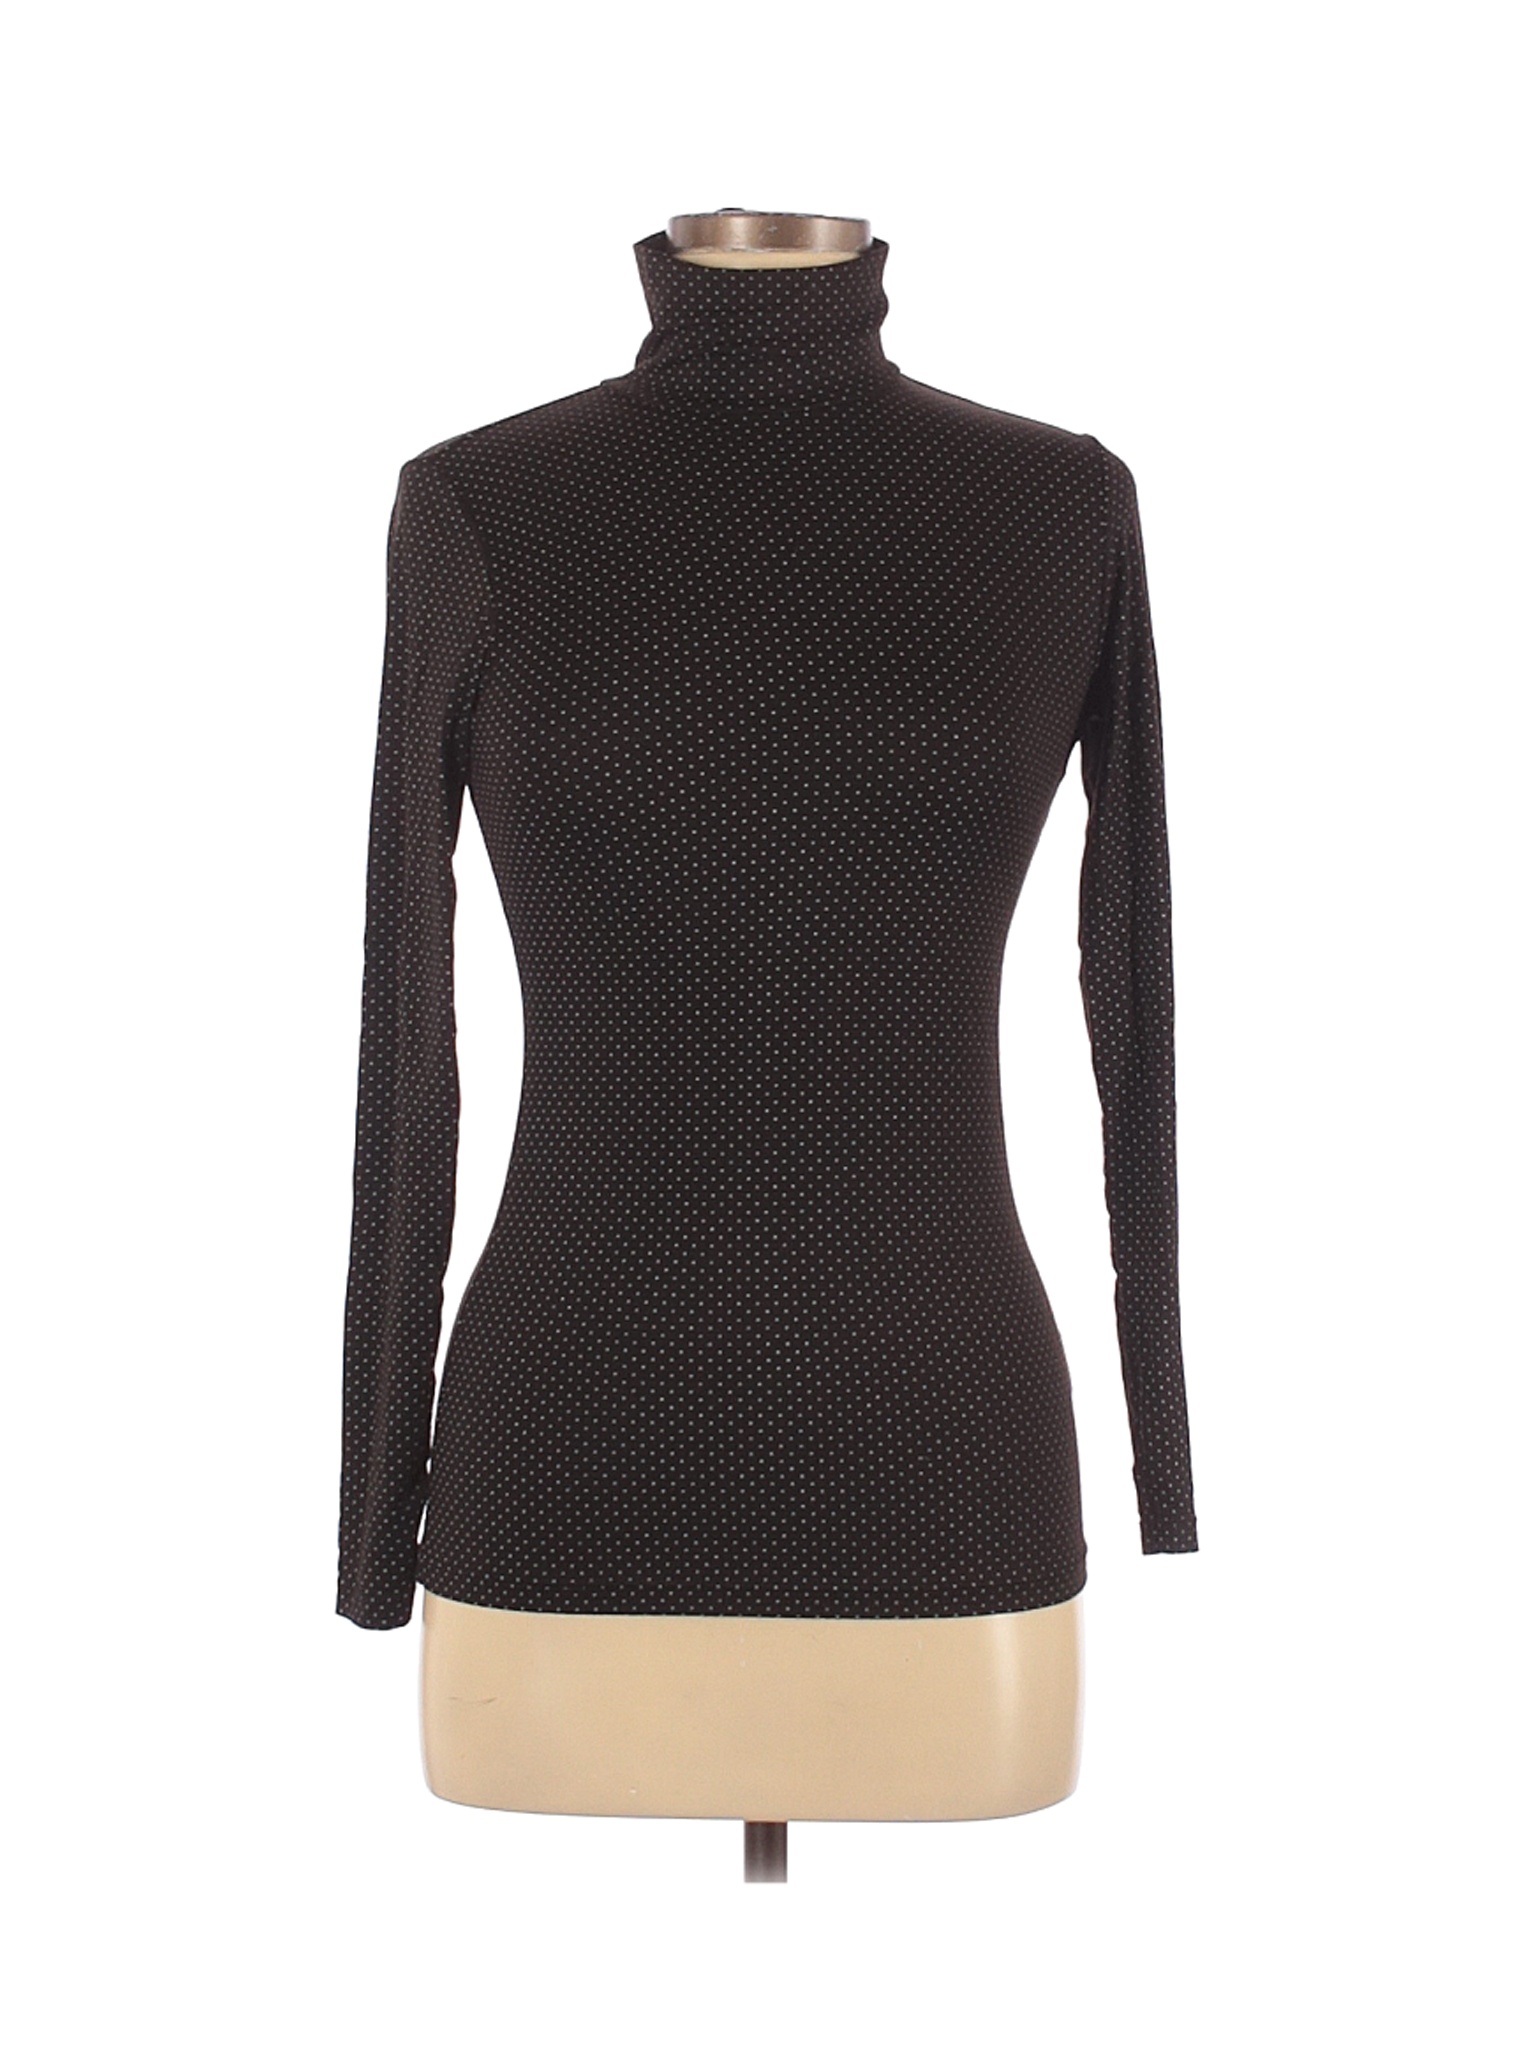  Uniqlo  Women Black Long Sleeve Turtleneck  M eBay